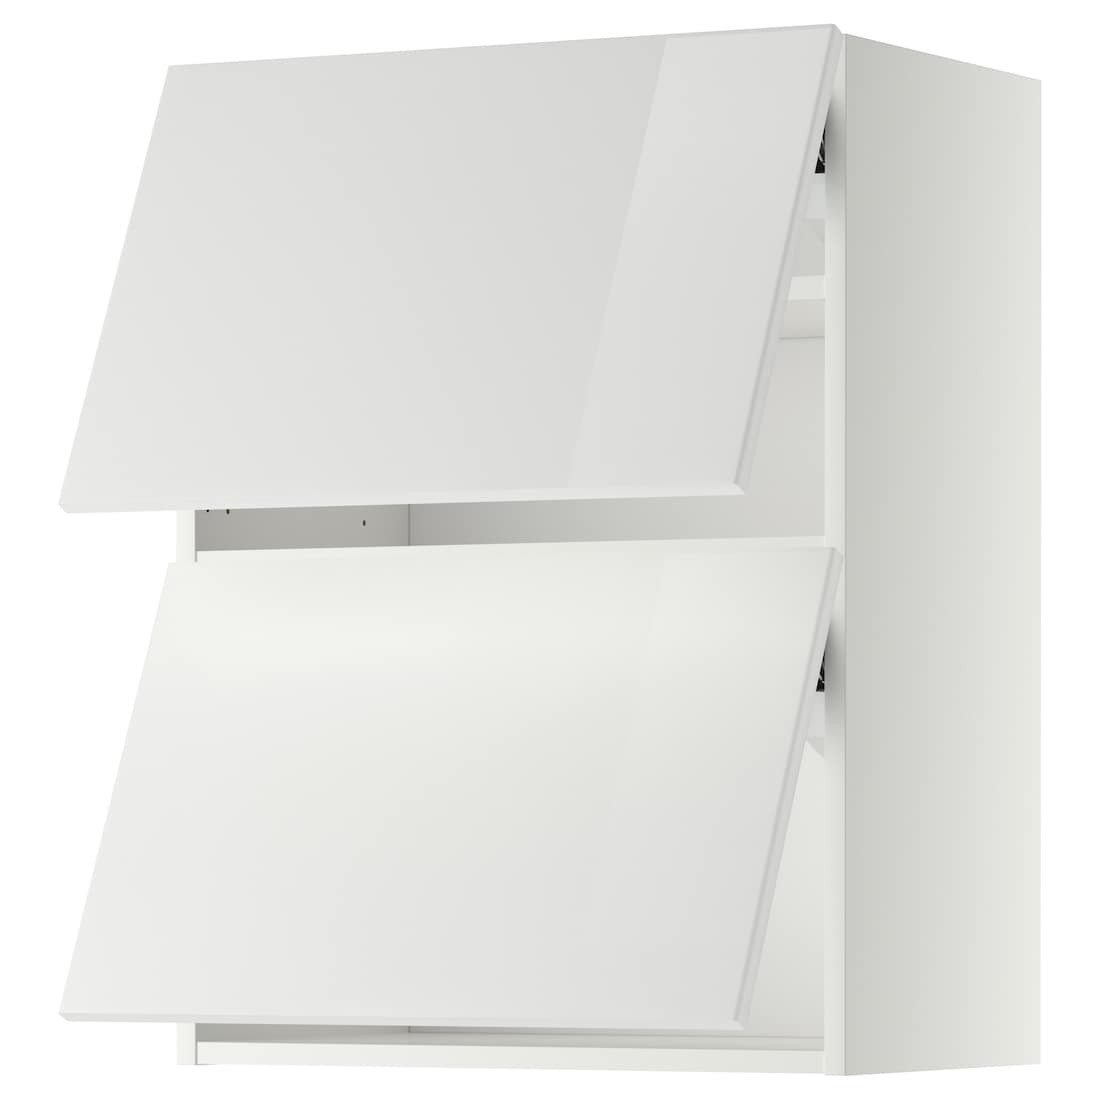 IKEA METOD МЕТОД Навесной горизонтальный шкаф / 2 двери, белый / Ringhult белый, 60x80 см 09391933 093.919.33